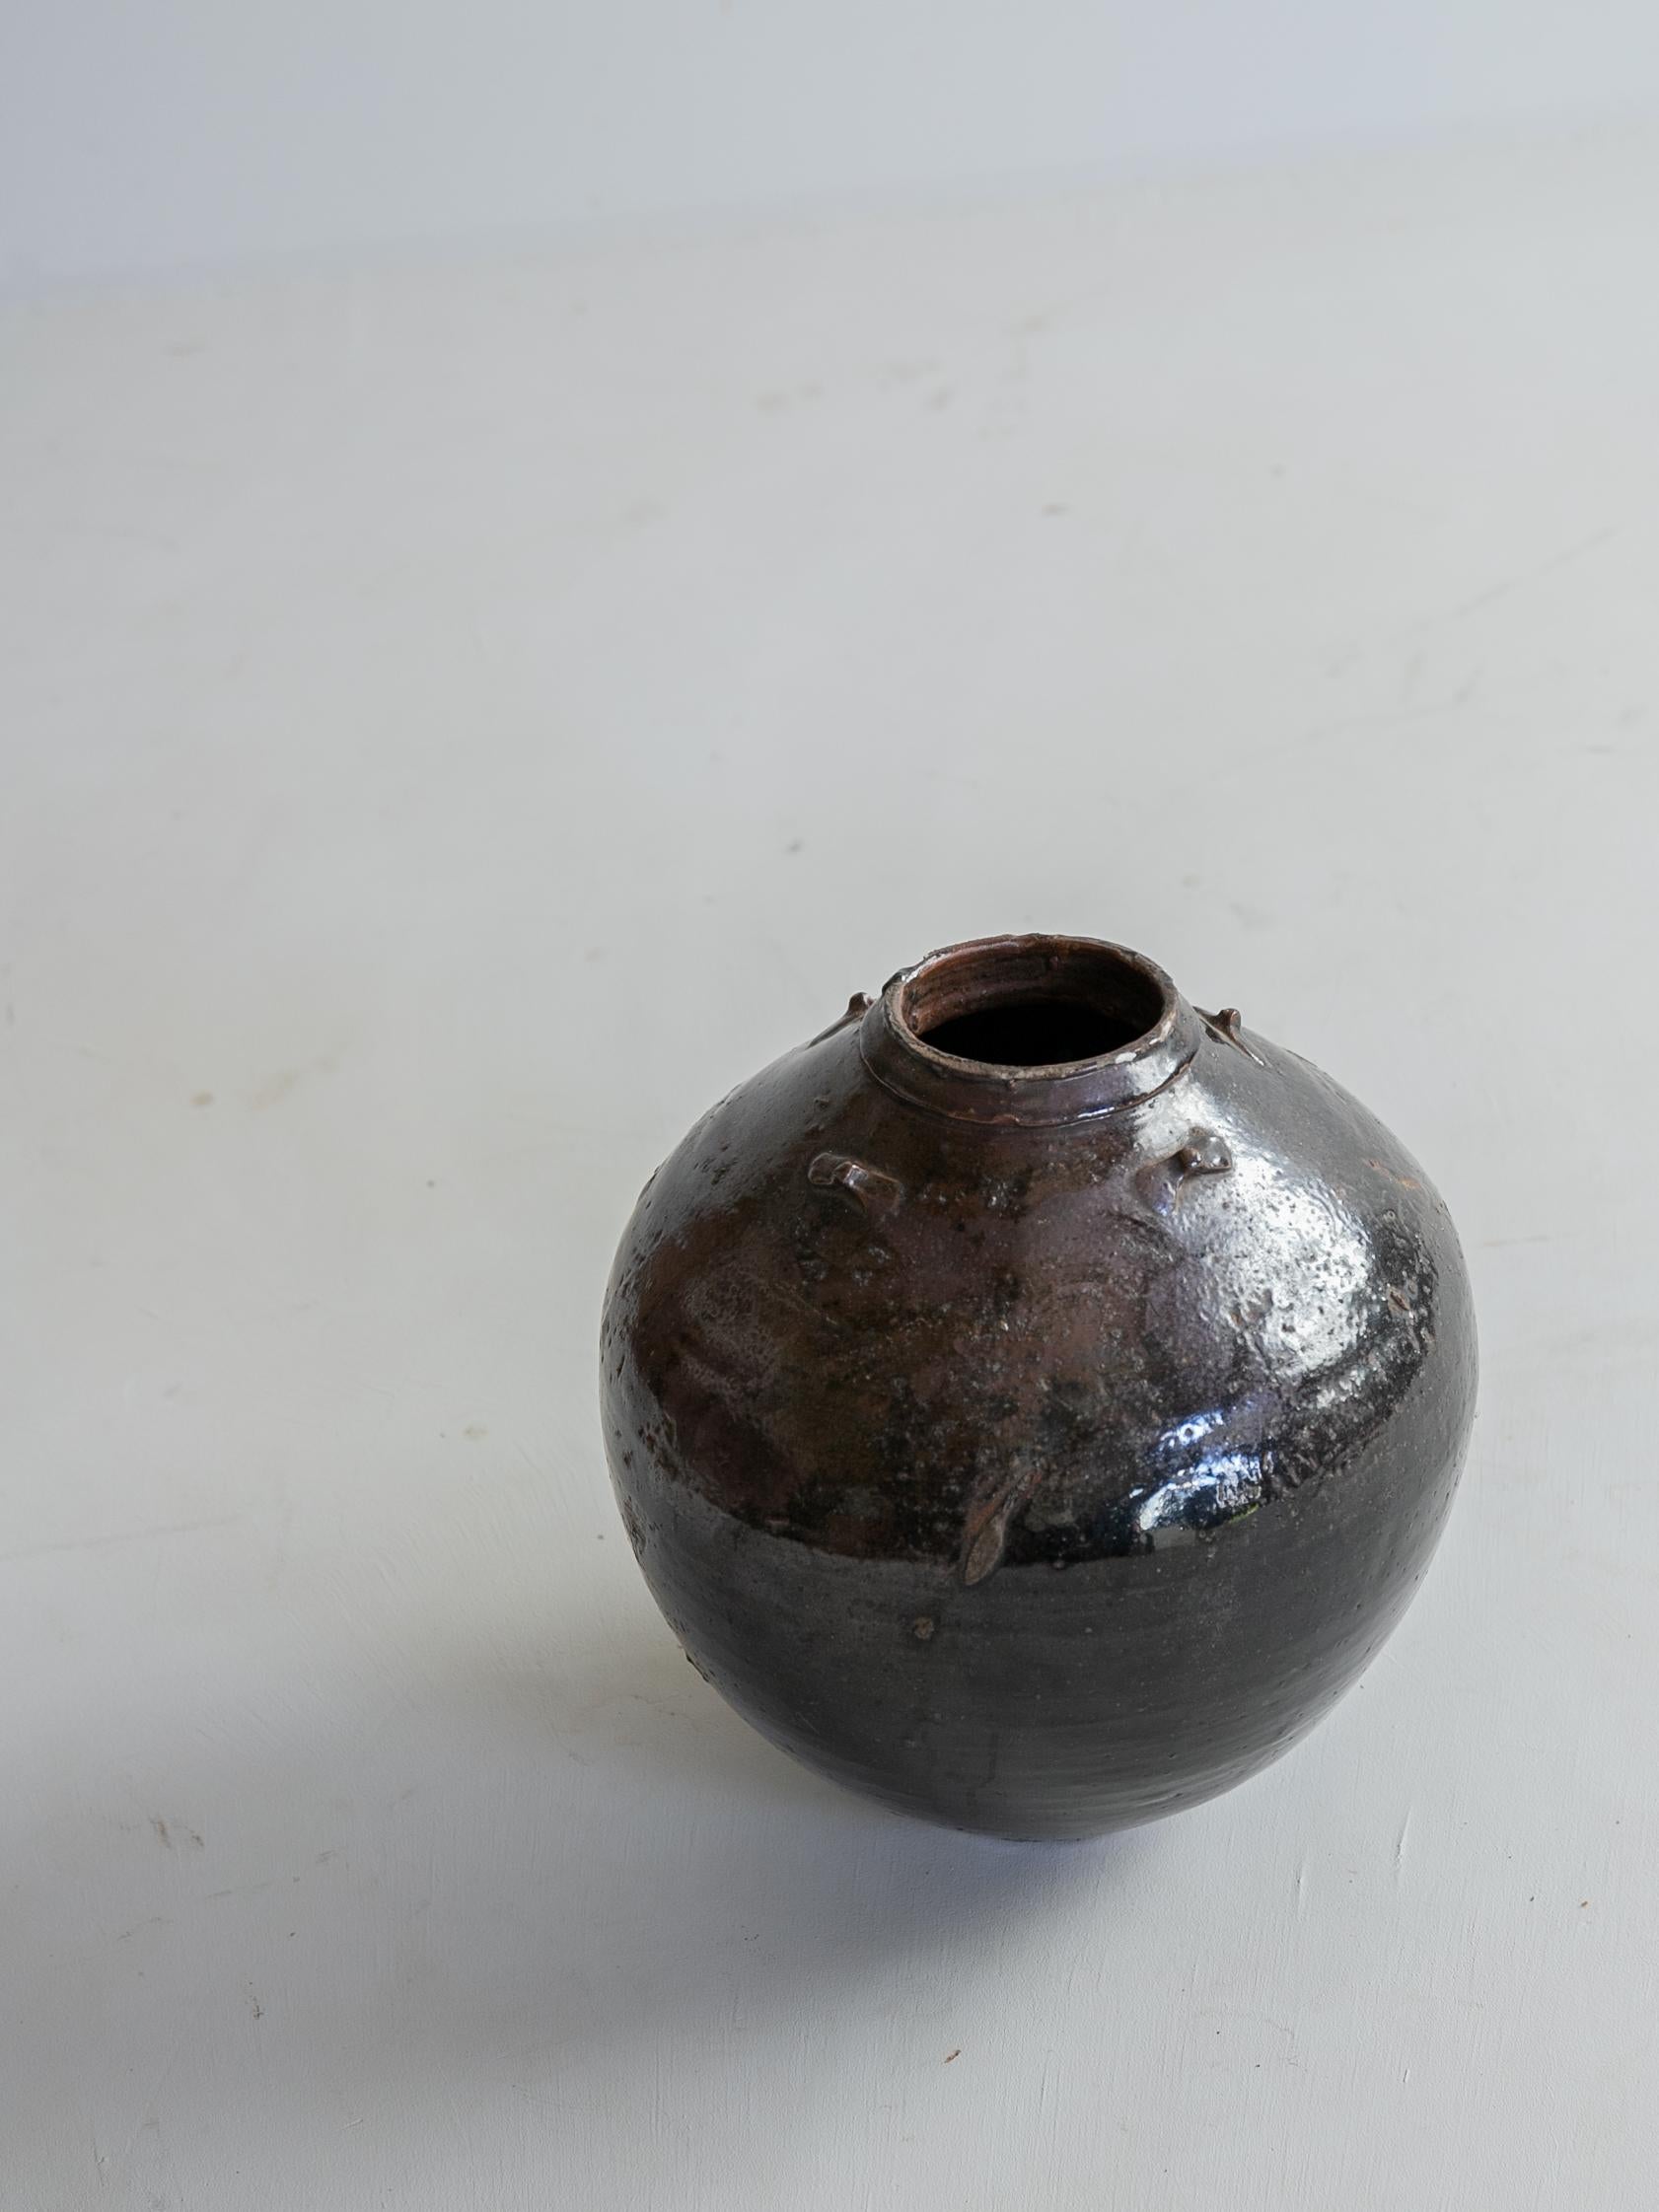 Chinese Antique Black Pottery Jar / 1500s / Wabi-Sabi Tsubo / Beautiful Vase